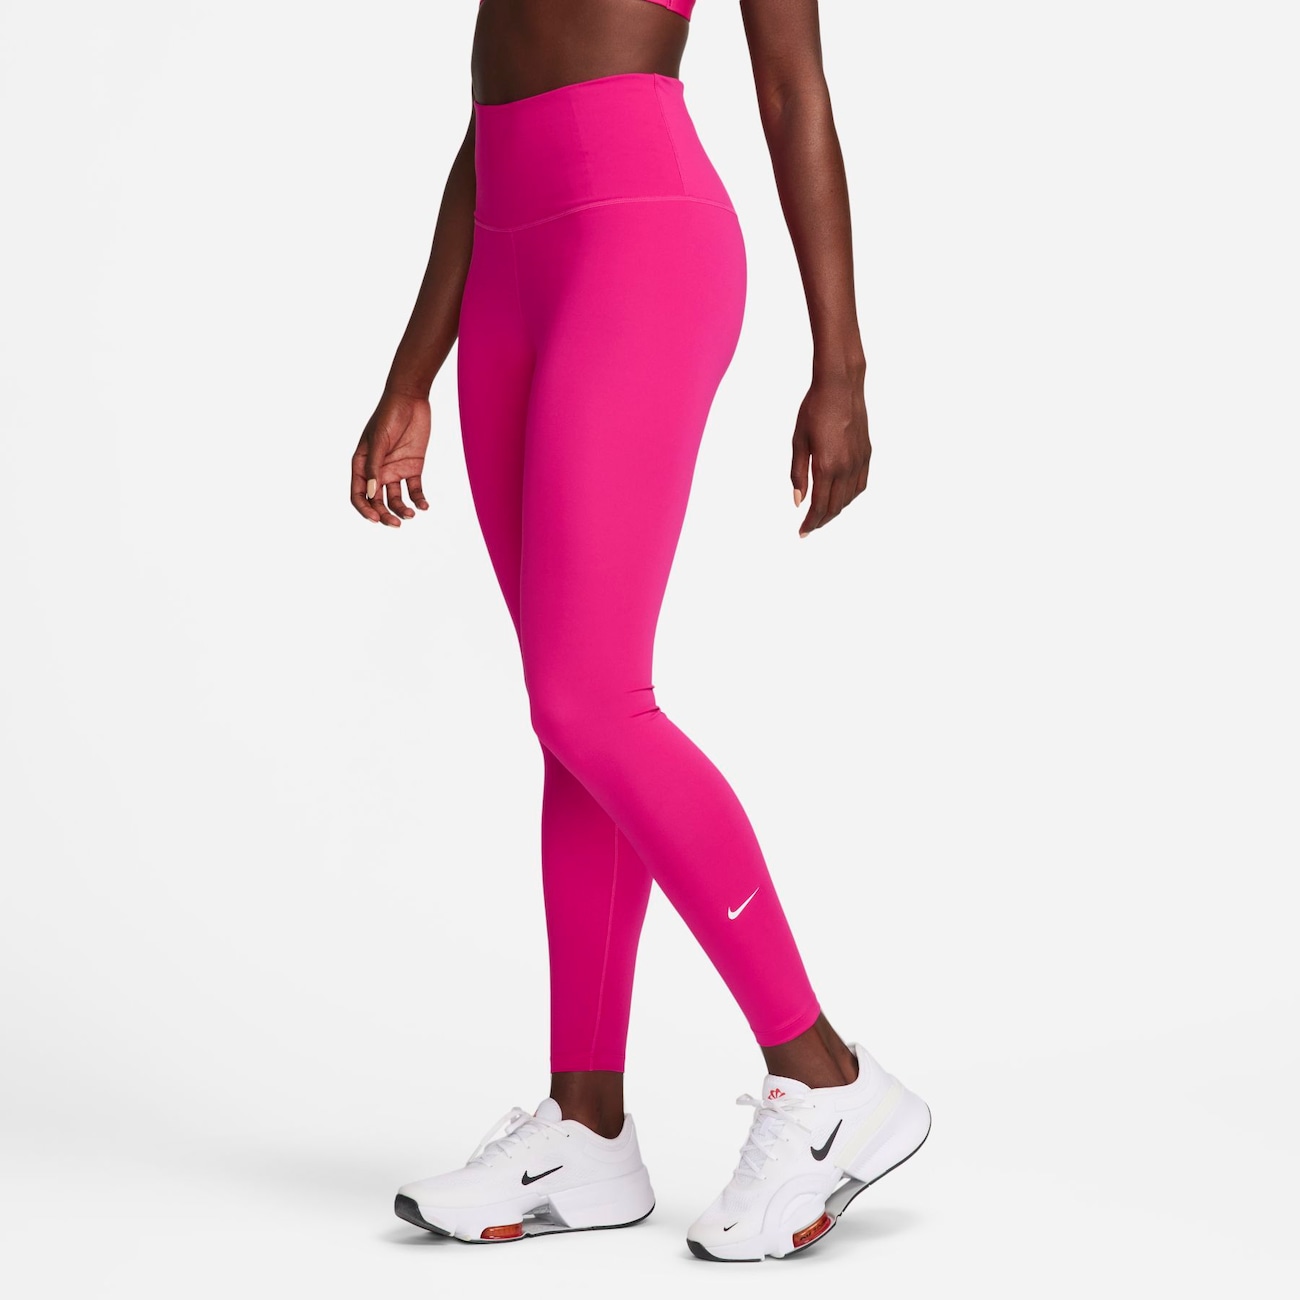 Legging Nike Dri-FIT One Rosa - Compre Agora